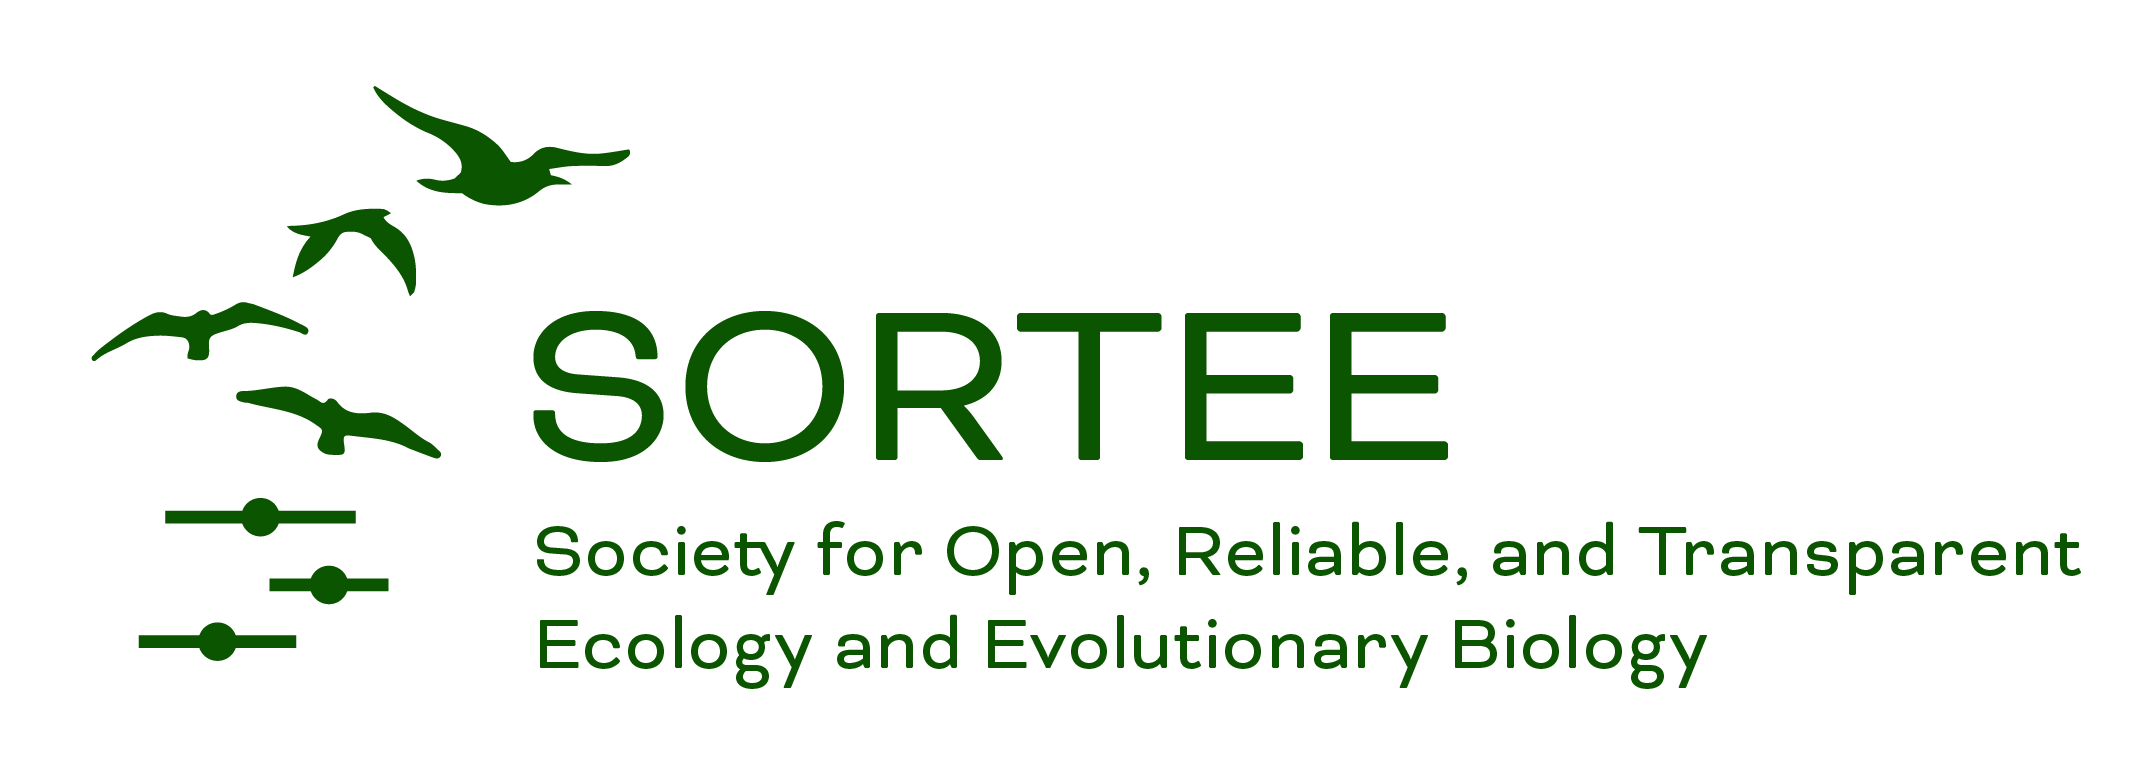 open-data logo